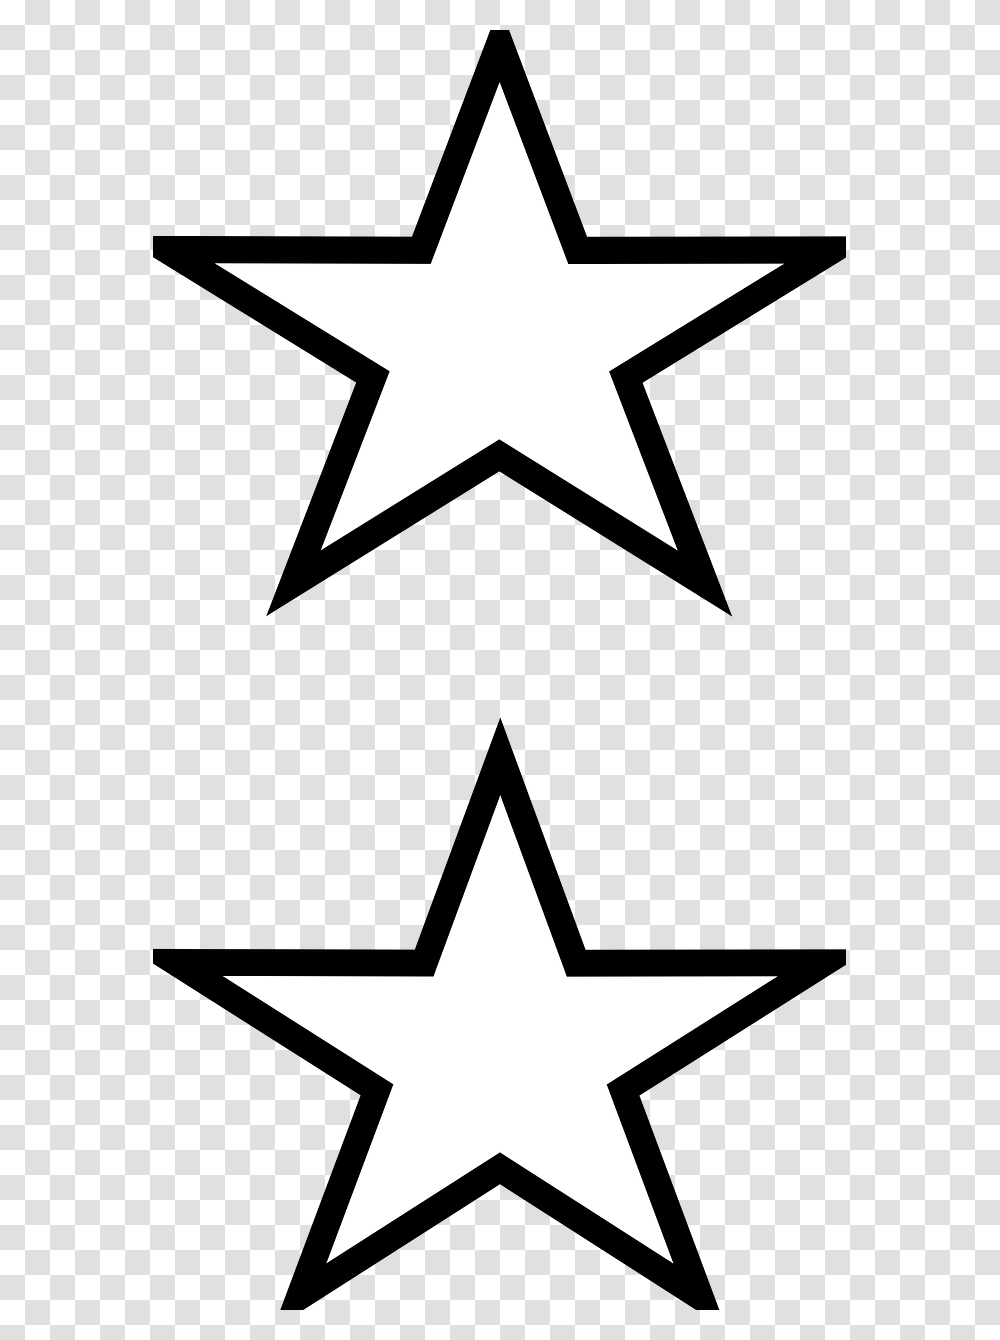 Gambar Bintang Hitam Putih, Cross, Star Symbol, Recycling Symbol Transparent Png